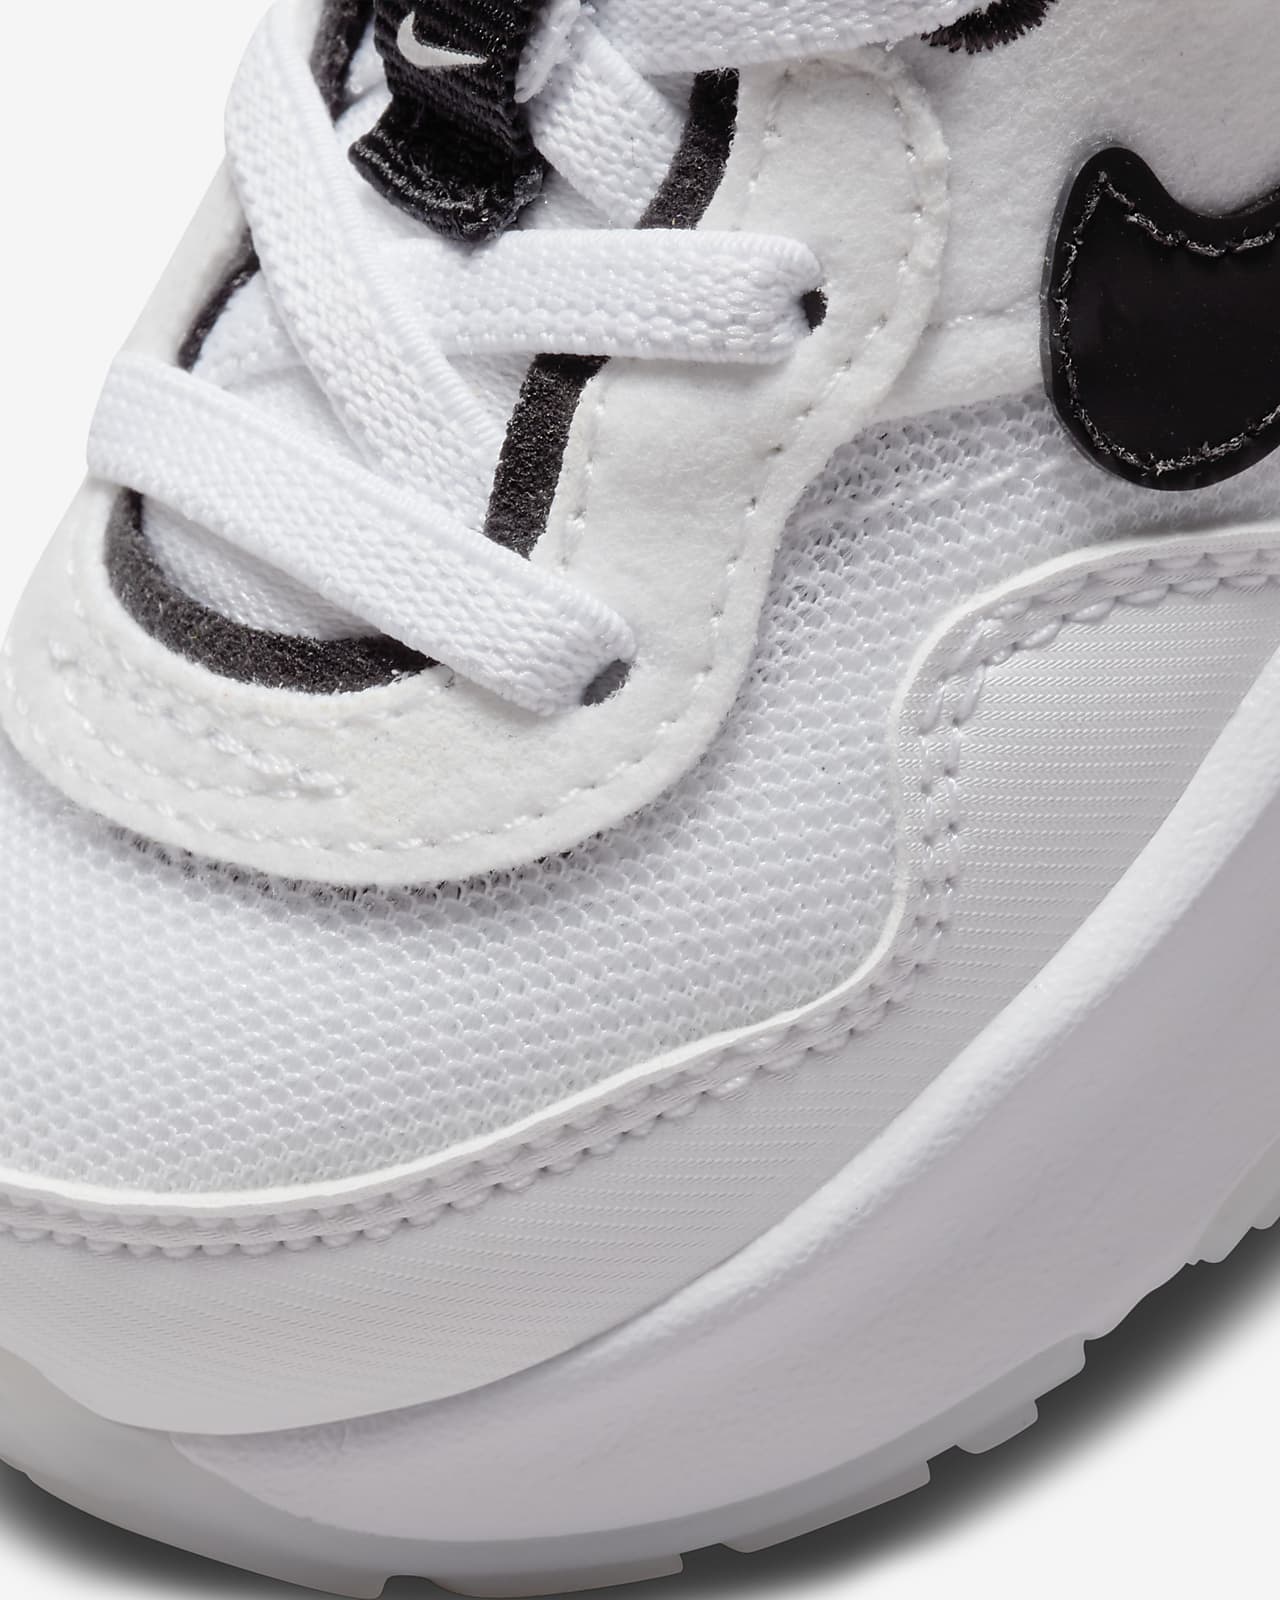 Motif Air Nike Shoes. Max Baby/Toddler